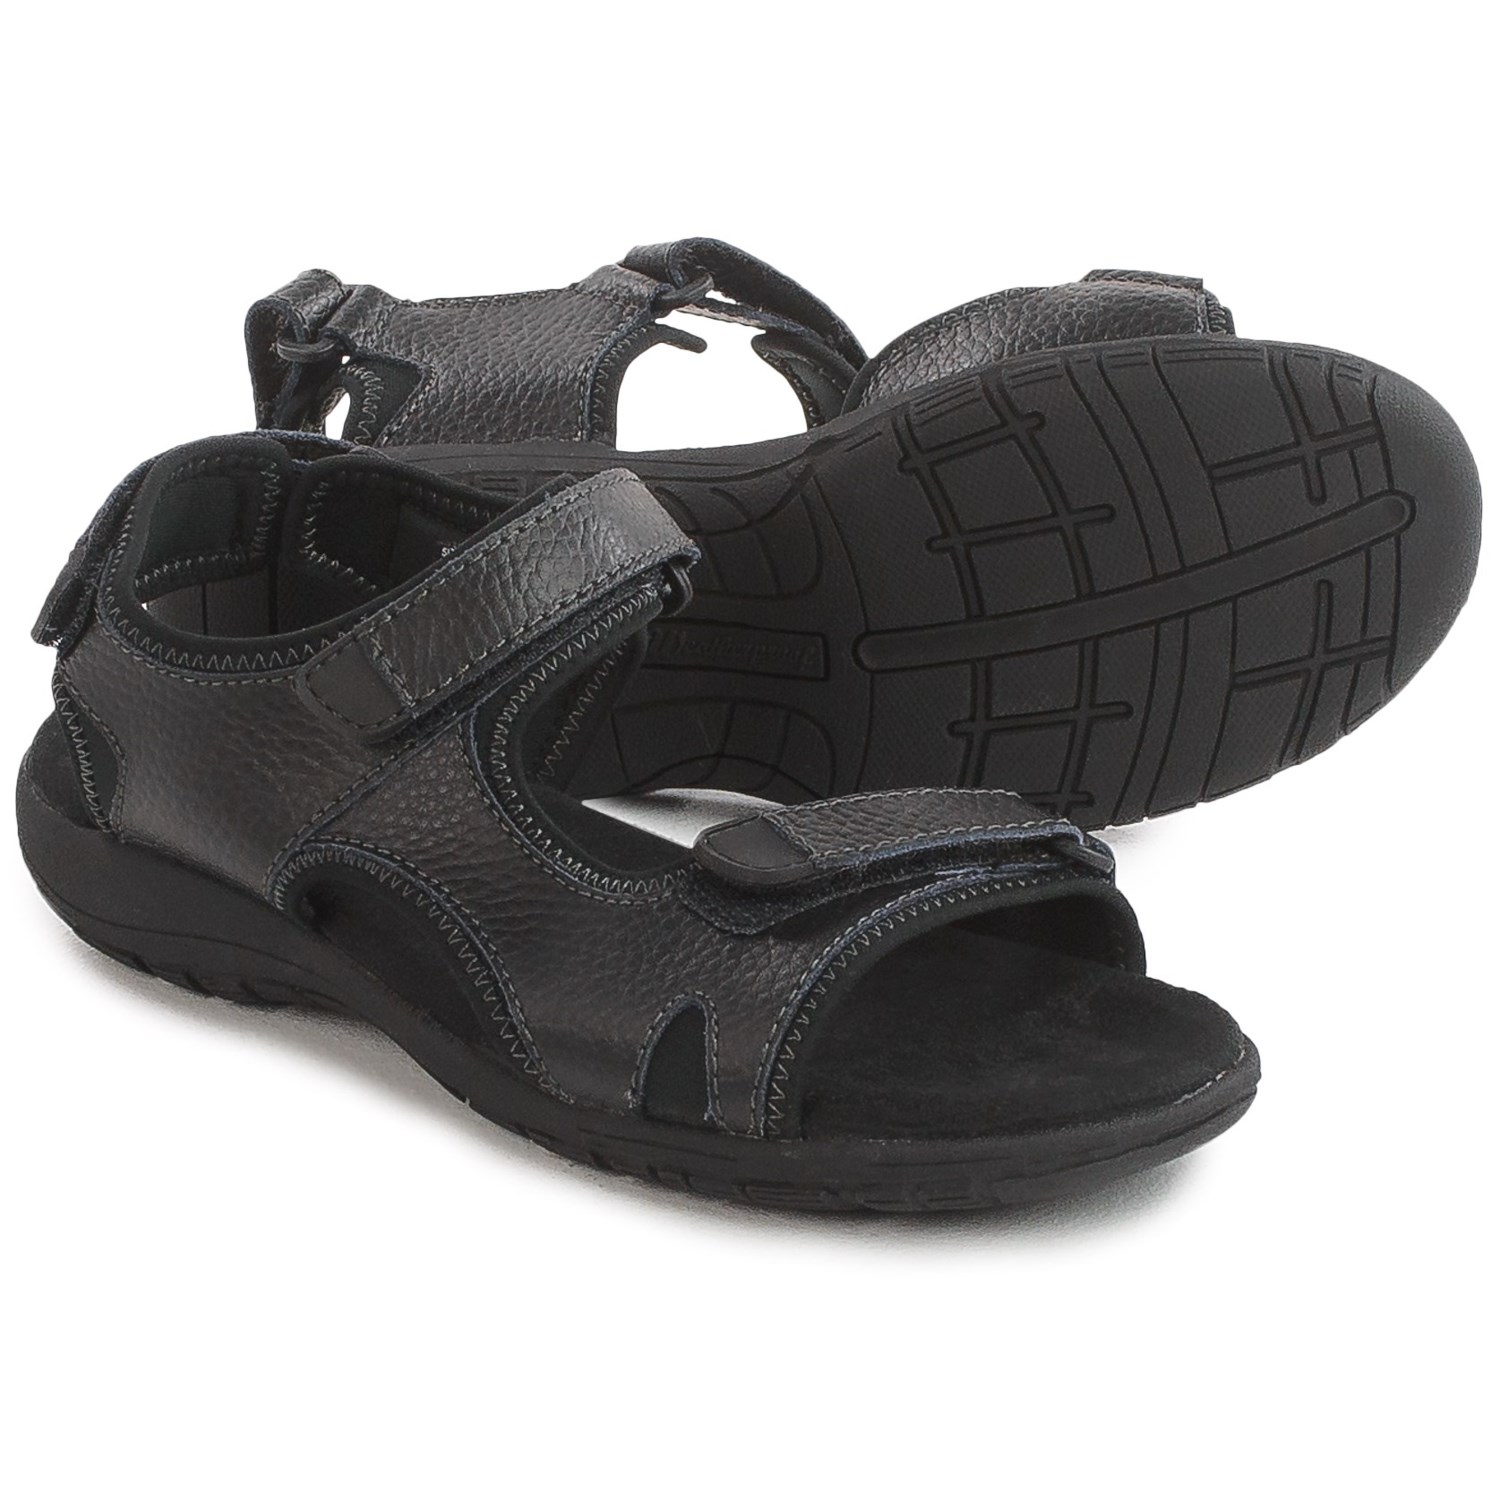 sport sandals